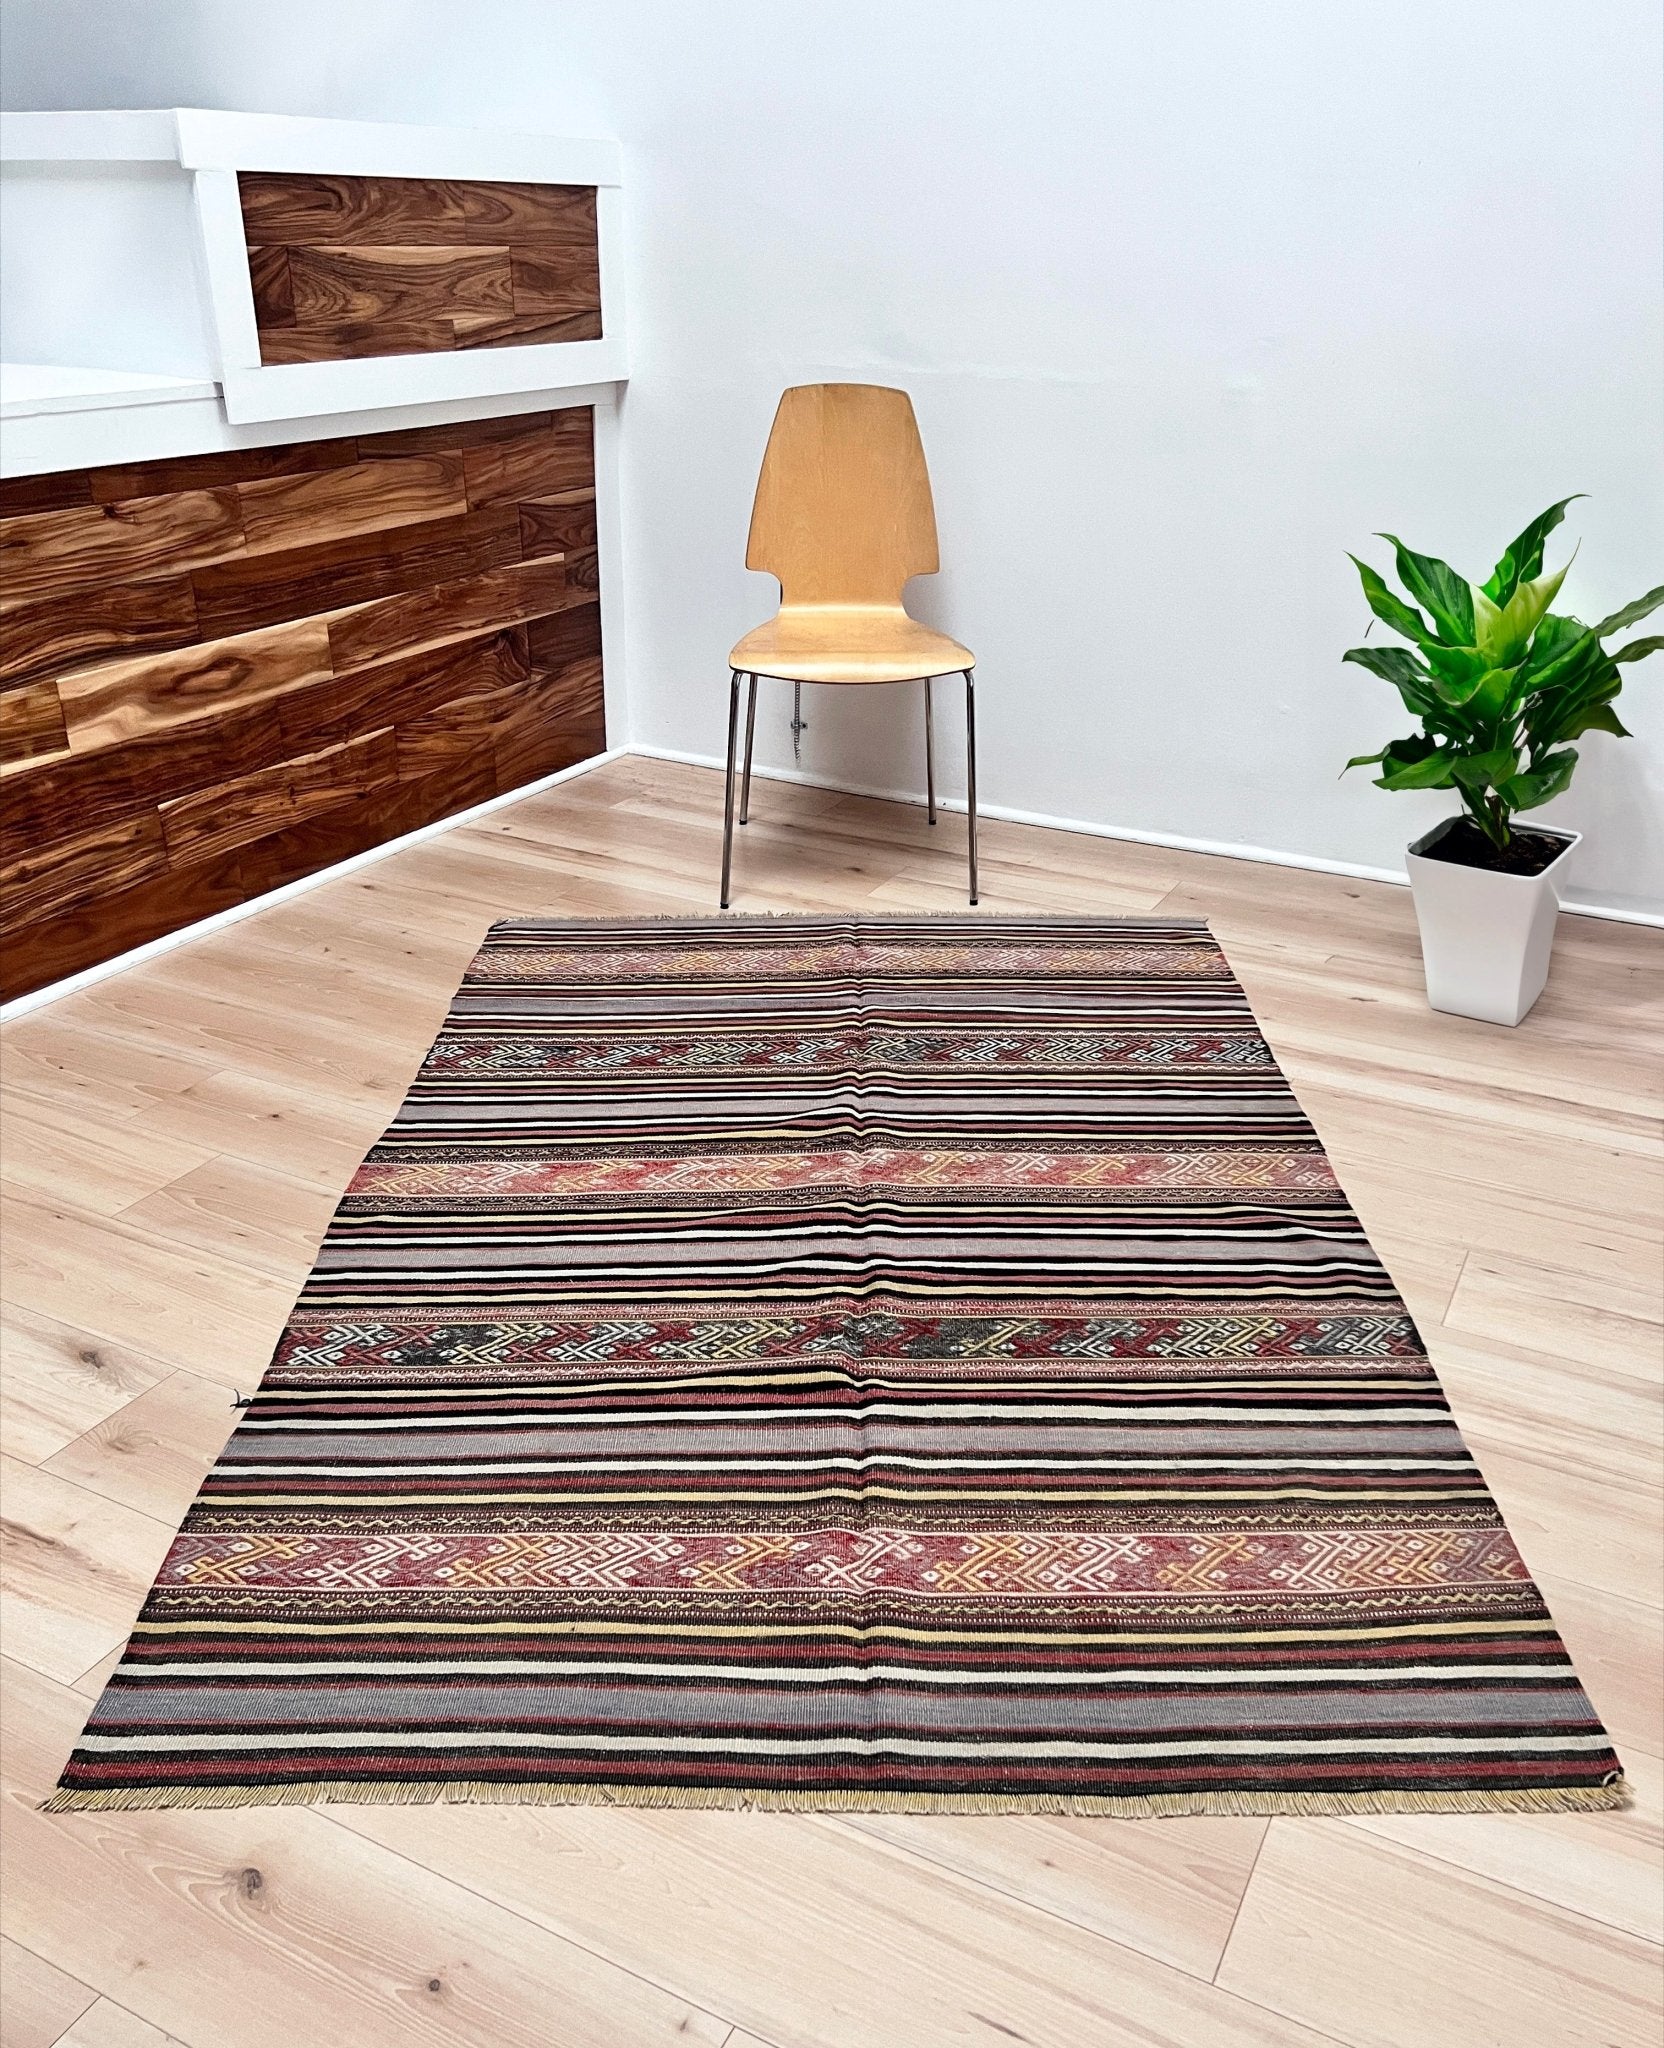 Milas vintage turkish kilim rug shop san francisco bay area. Buy rug online. Vintage rug shop portland, seattle, berkeley.